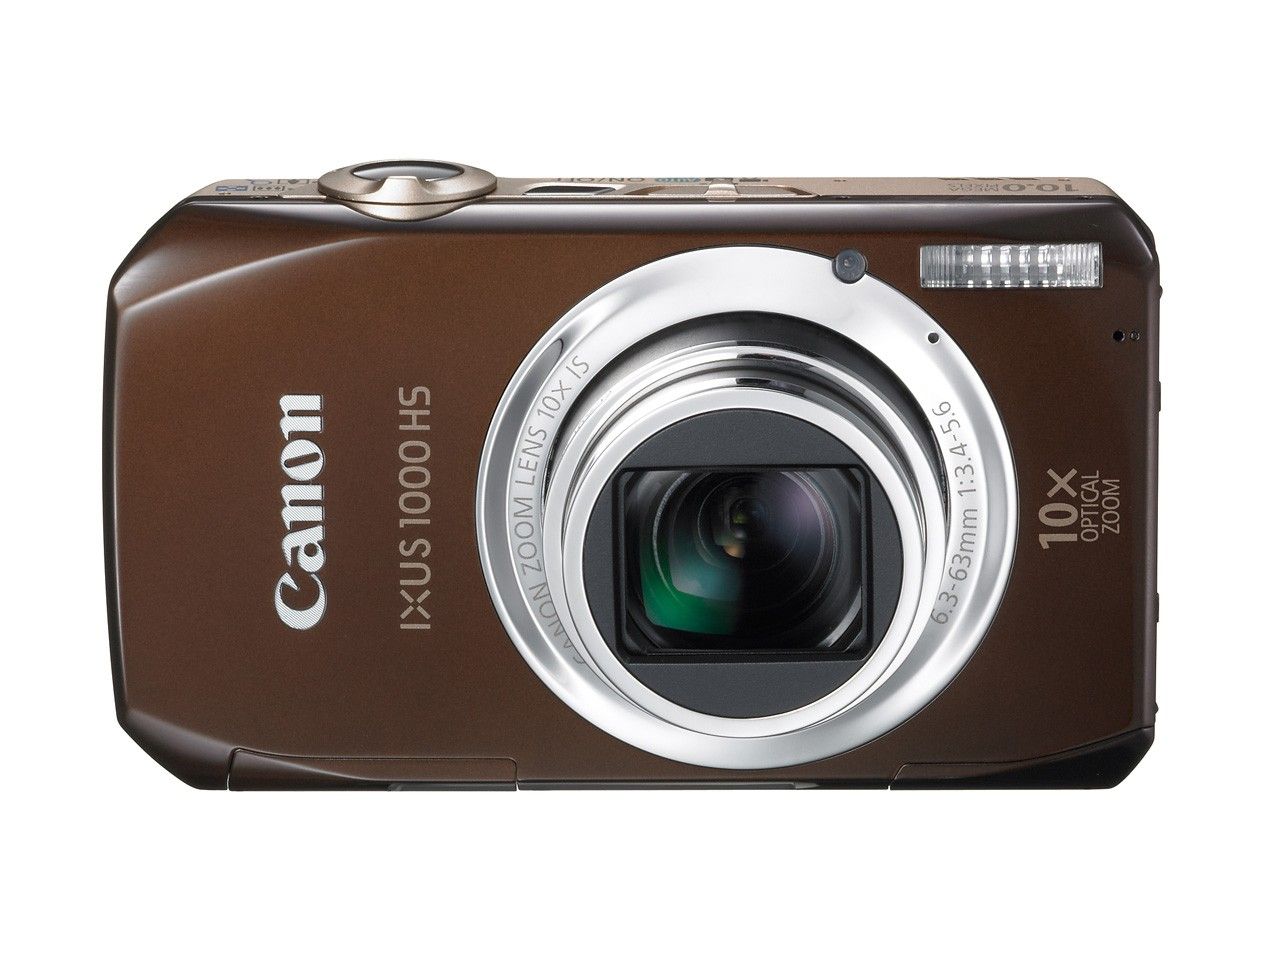 Canon Digital Ixus 100 IS / PowerShot SD780 IS : Caratteristiche e Opinioni | JuzaPhoto